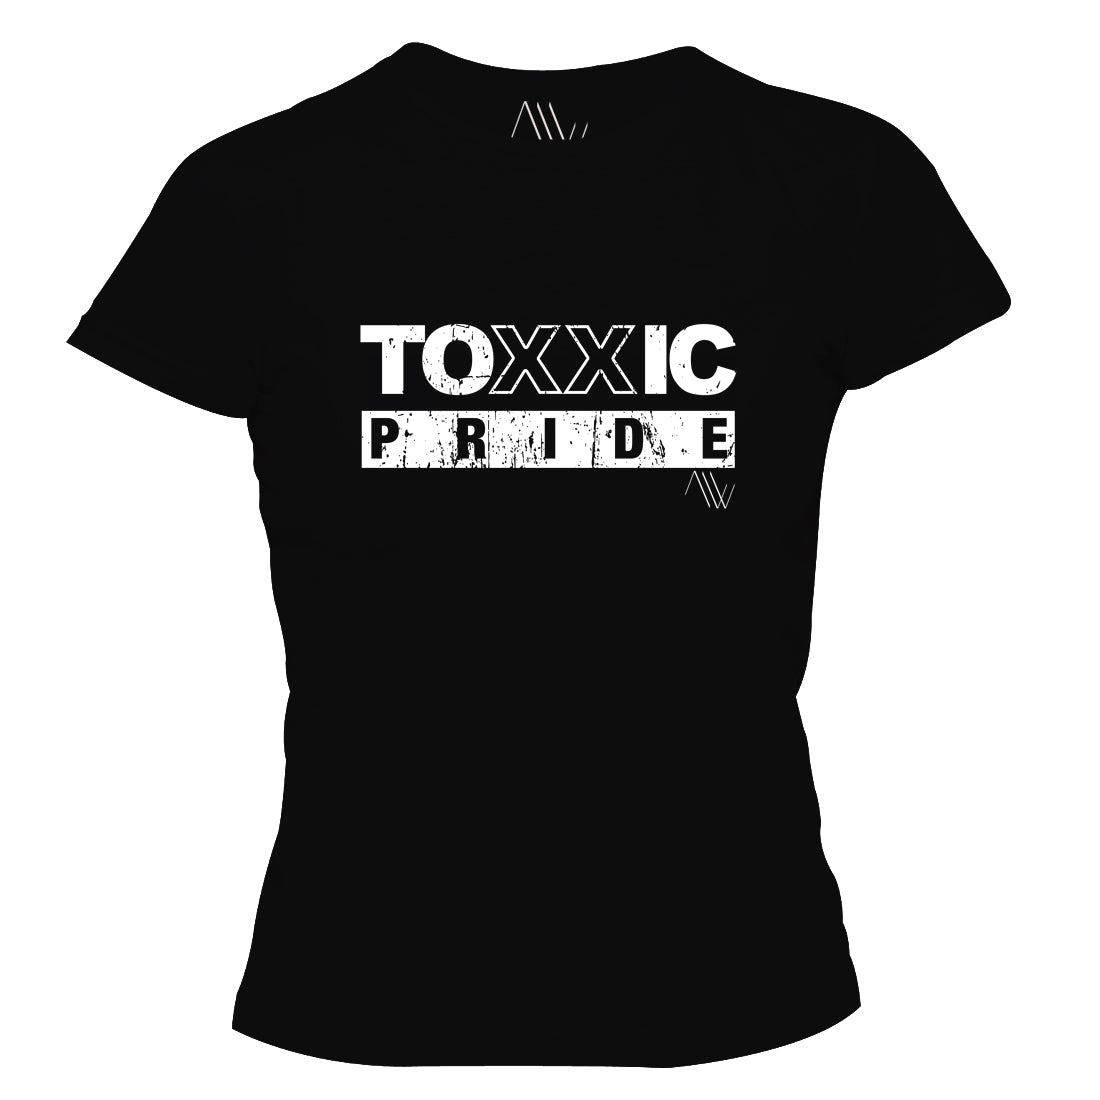 TOXXIC Pride on Black (Pro-Toxic Femininity)